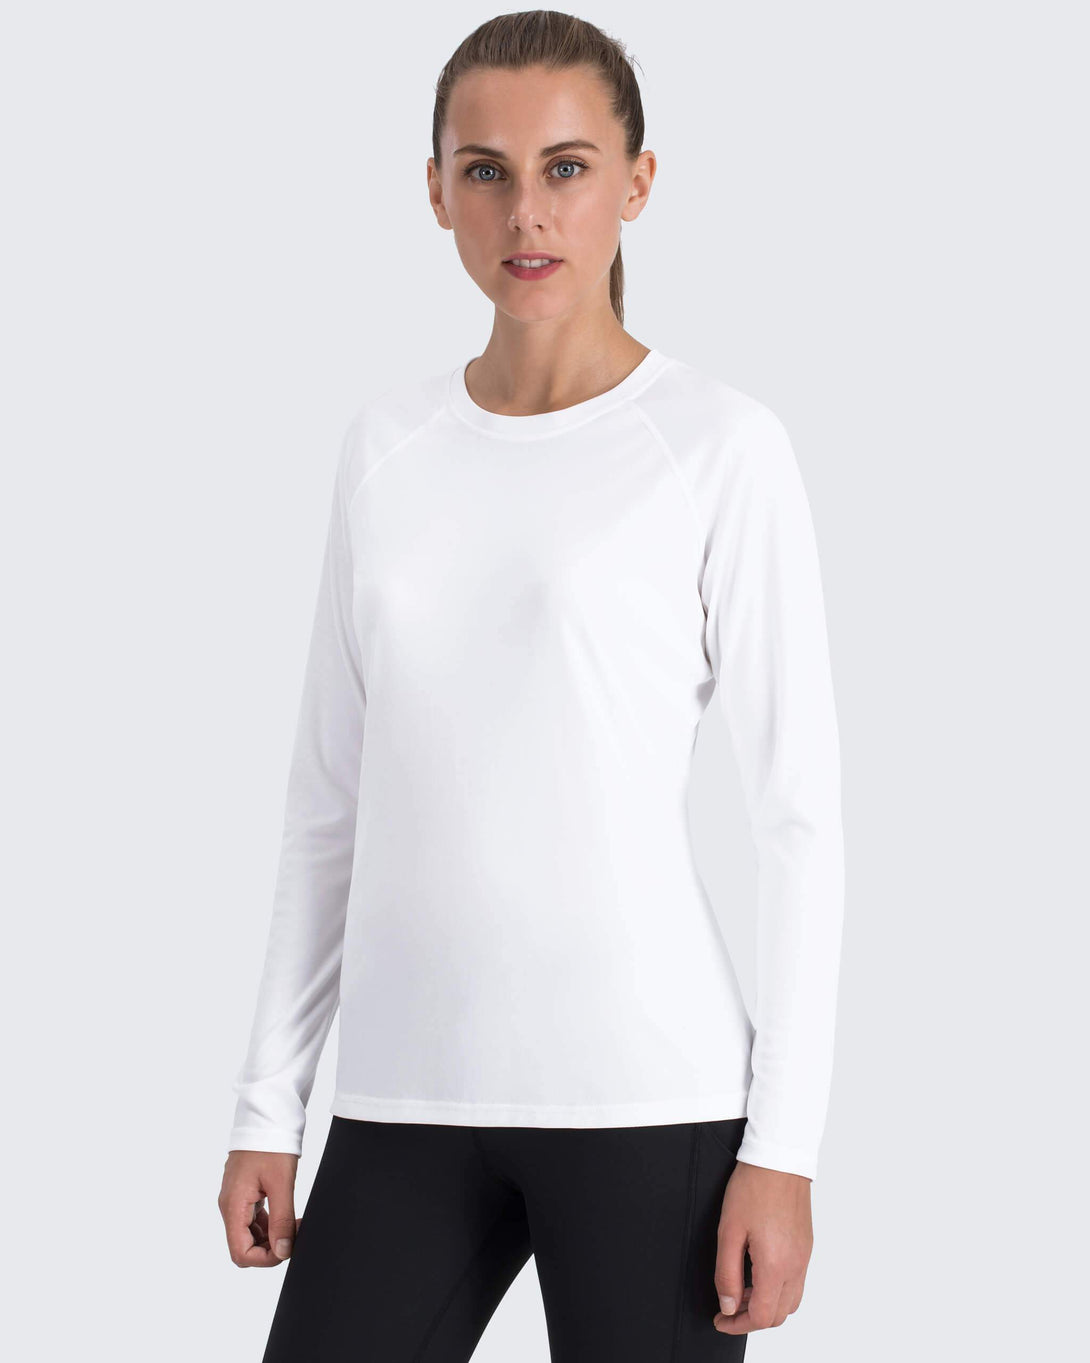 Naviskin Women's Quick Dry UPF 50+ Sun Protection Long Sleeve Shirt SP